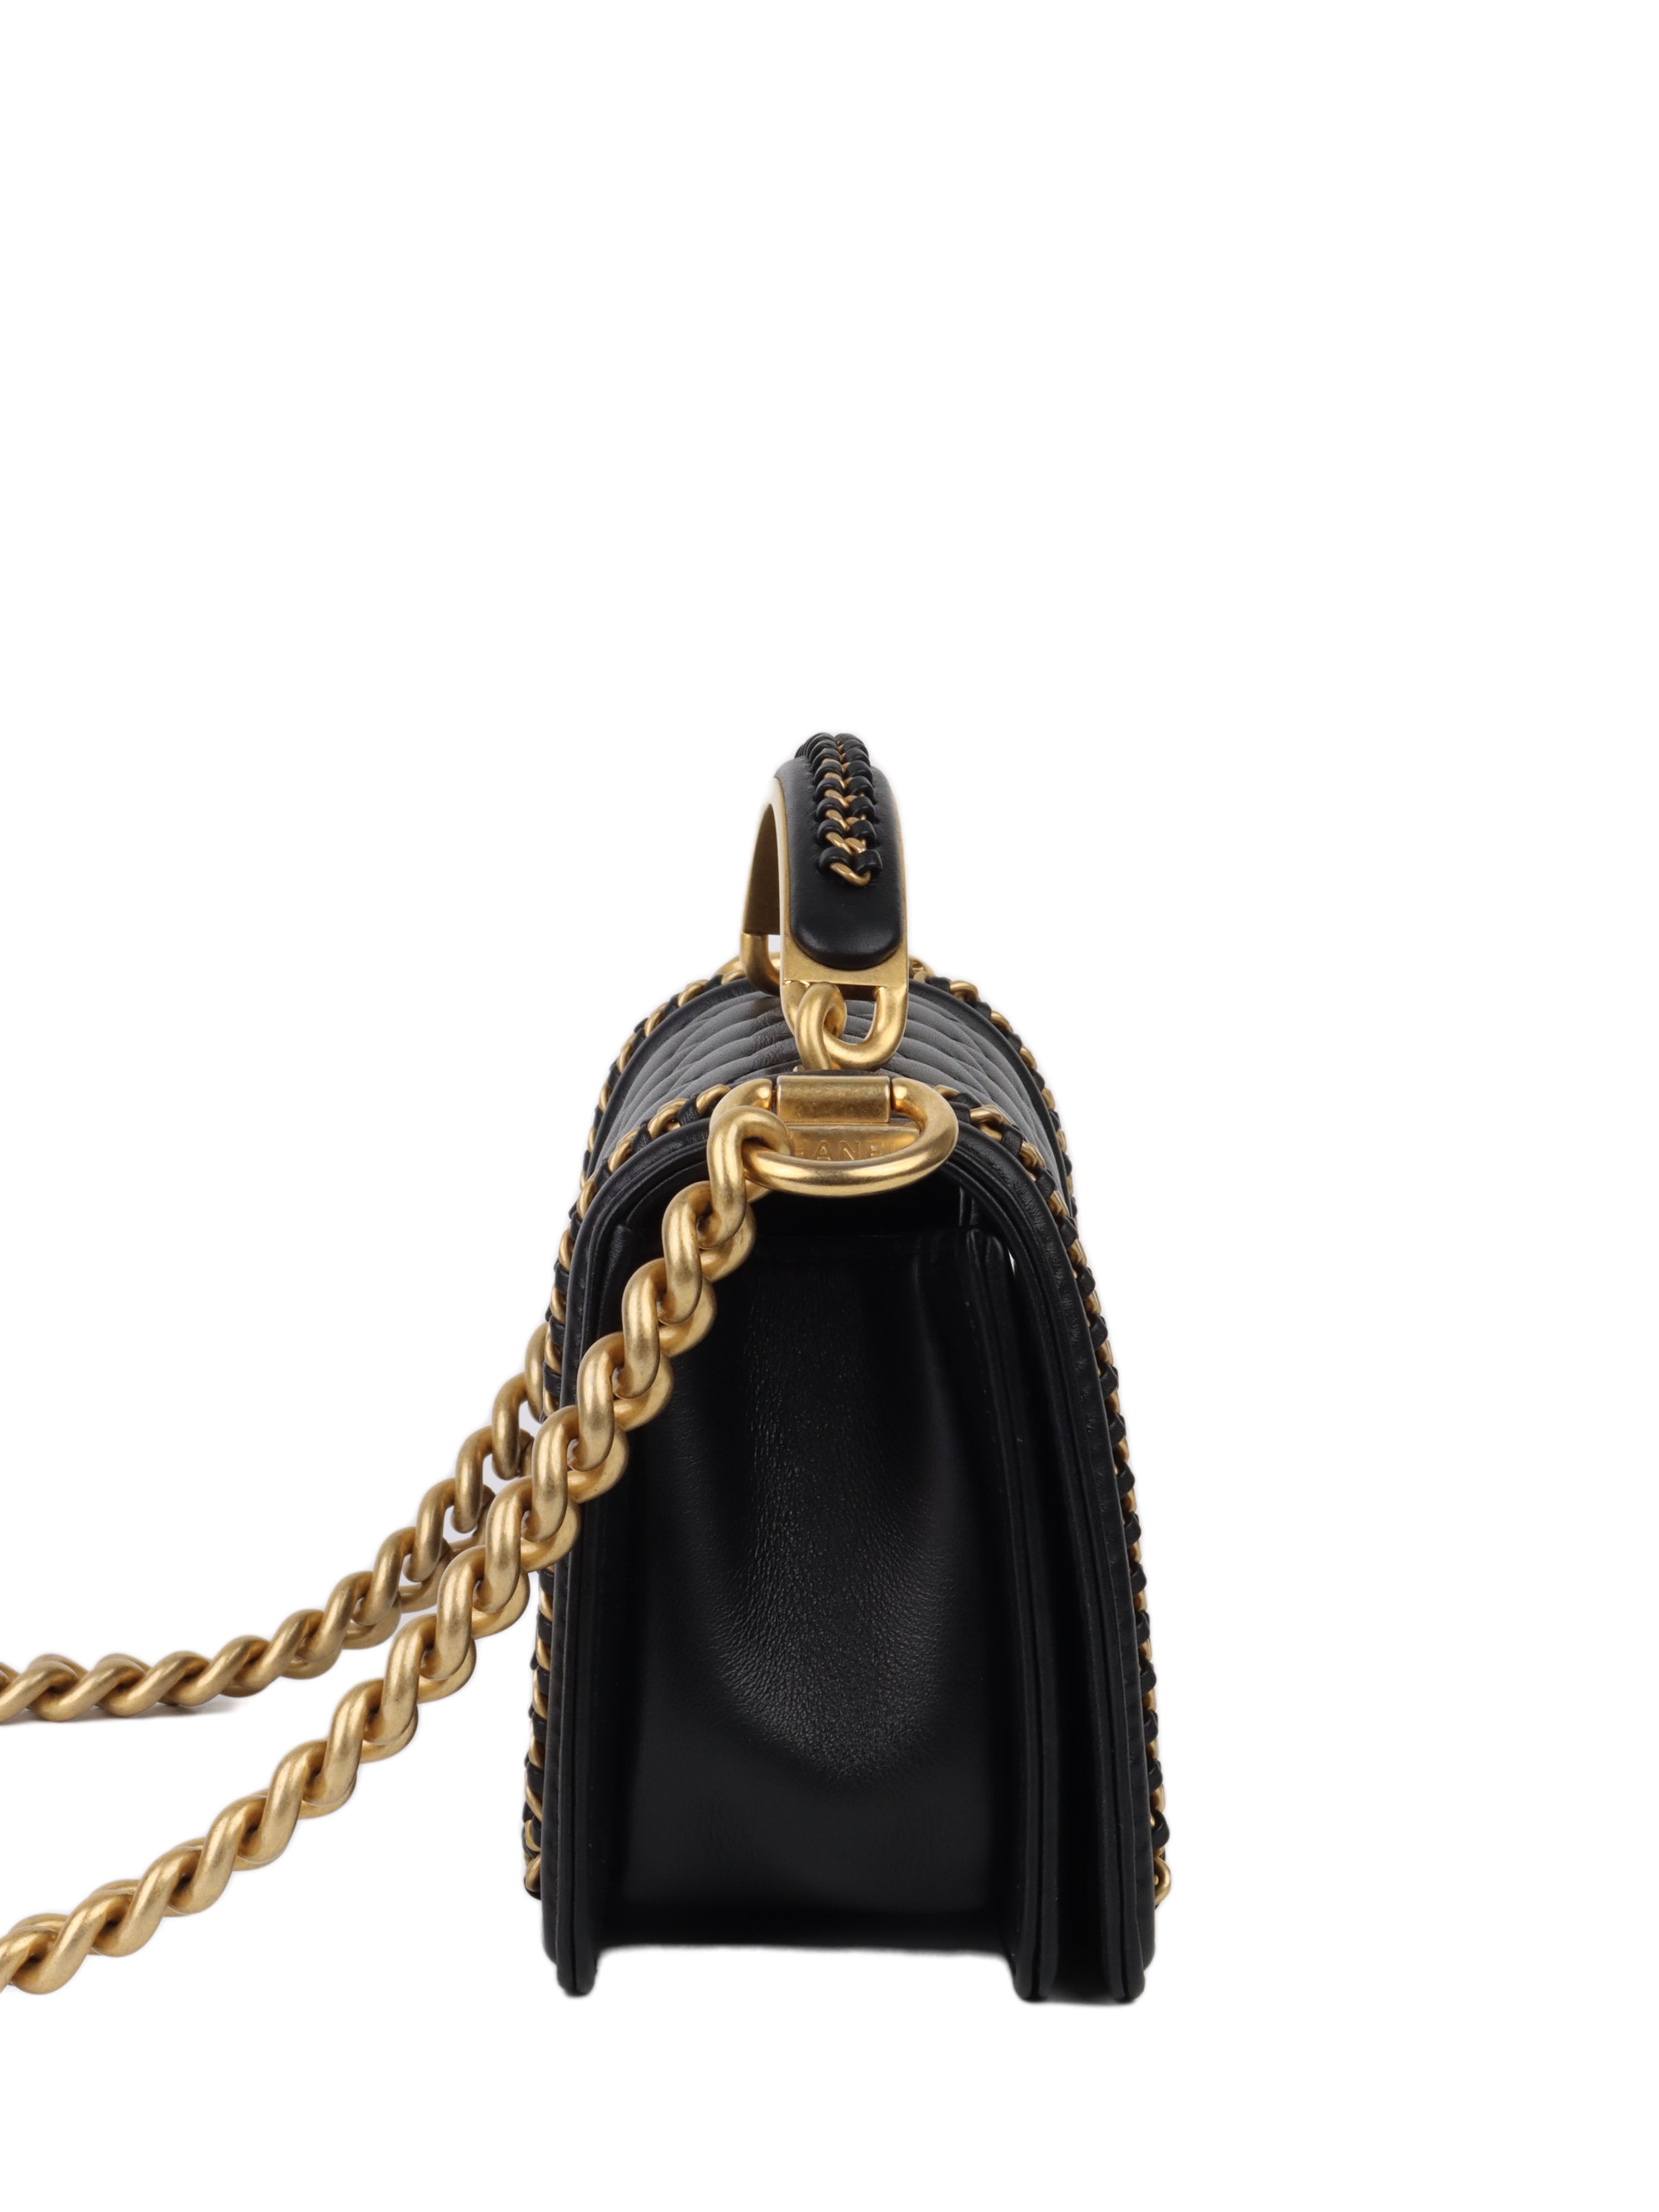 chanel all black chain purse | Bags, Chanel bag, Chanel handbags